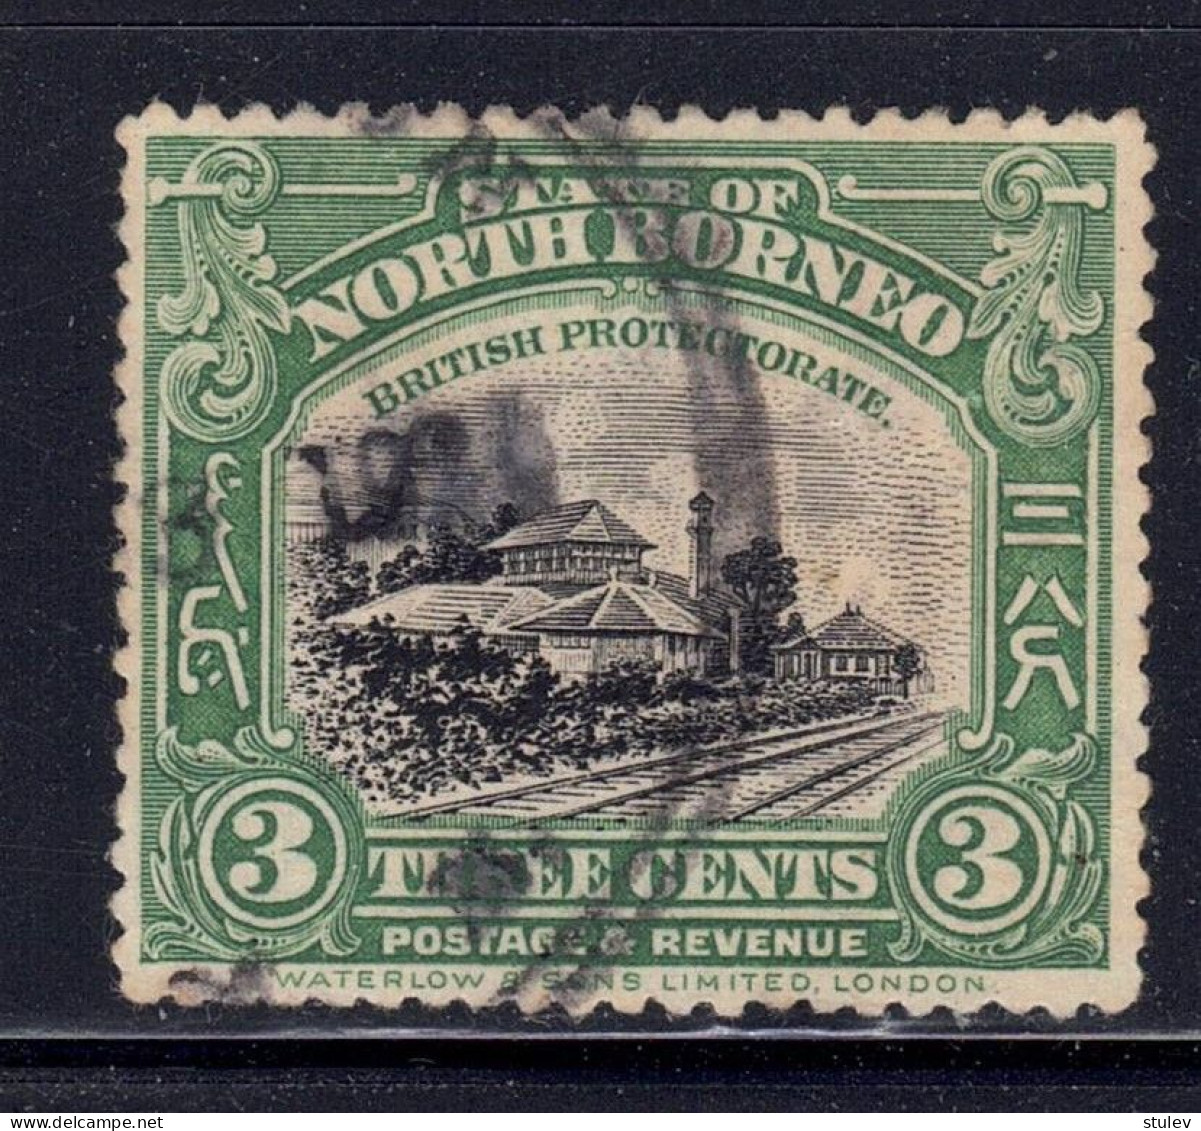 British North Borneo 1909-23 3 Cent Green & Black Used Canc JESSELTON BNB Rare - Bornéo Du Nord (...-1963)